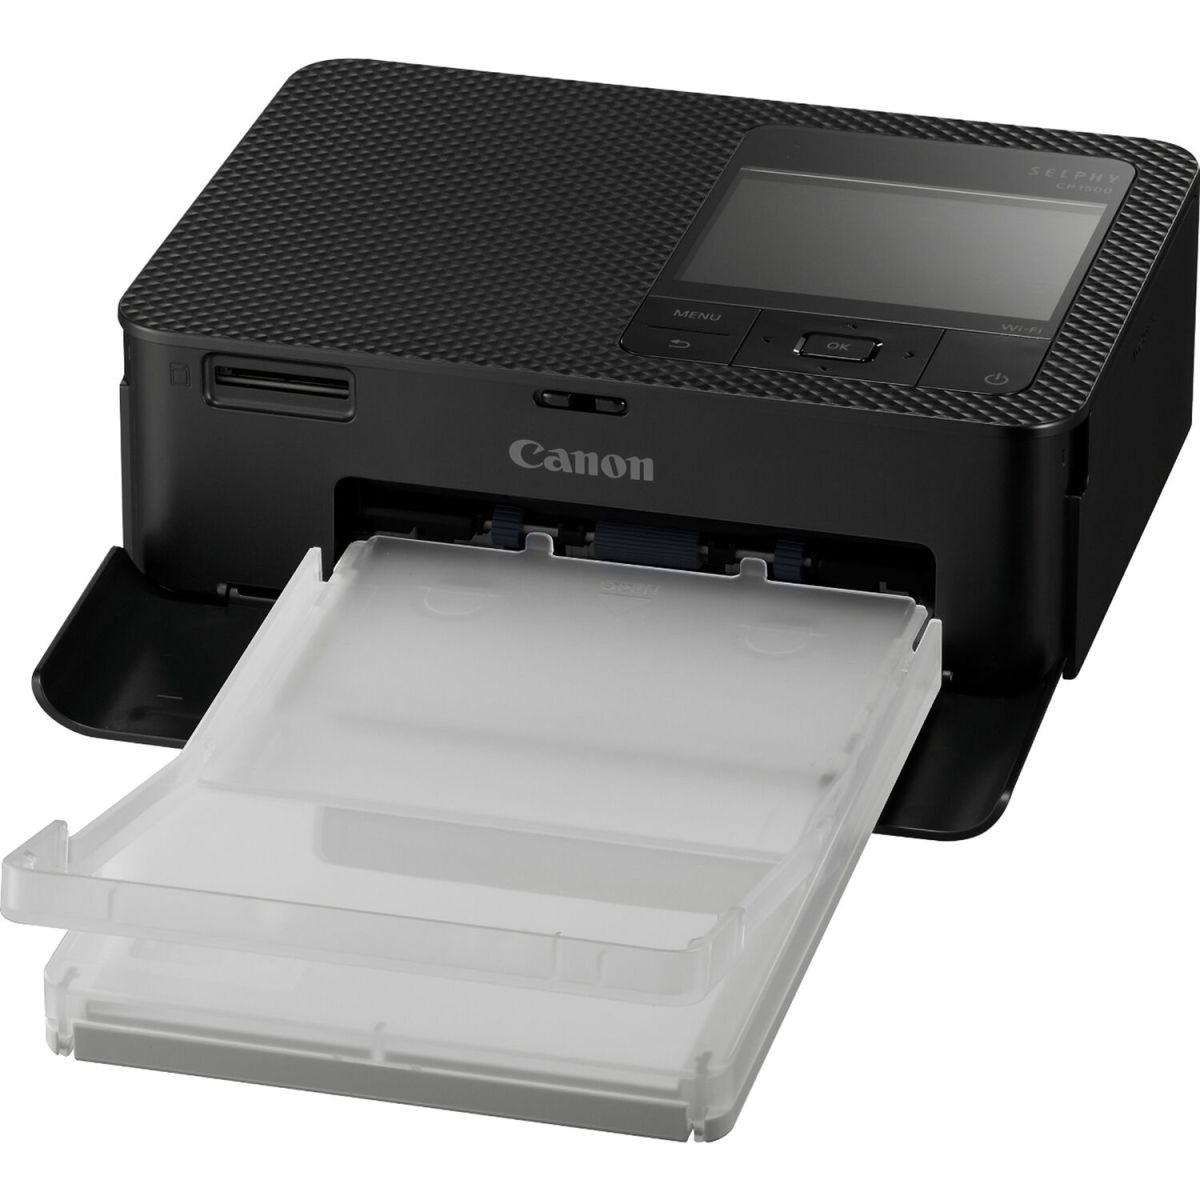 Canon Selphy CP1500 Imprimante photo compacte (blanc)